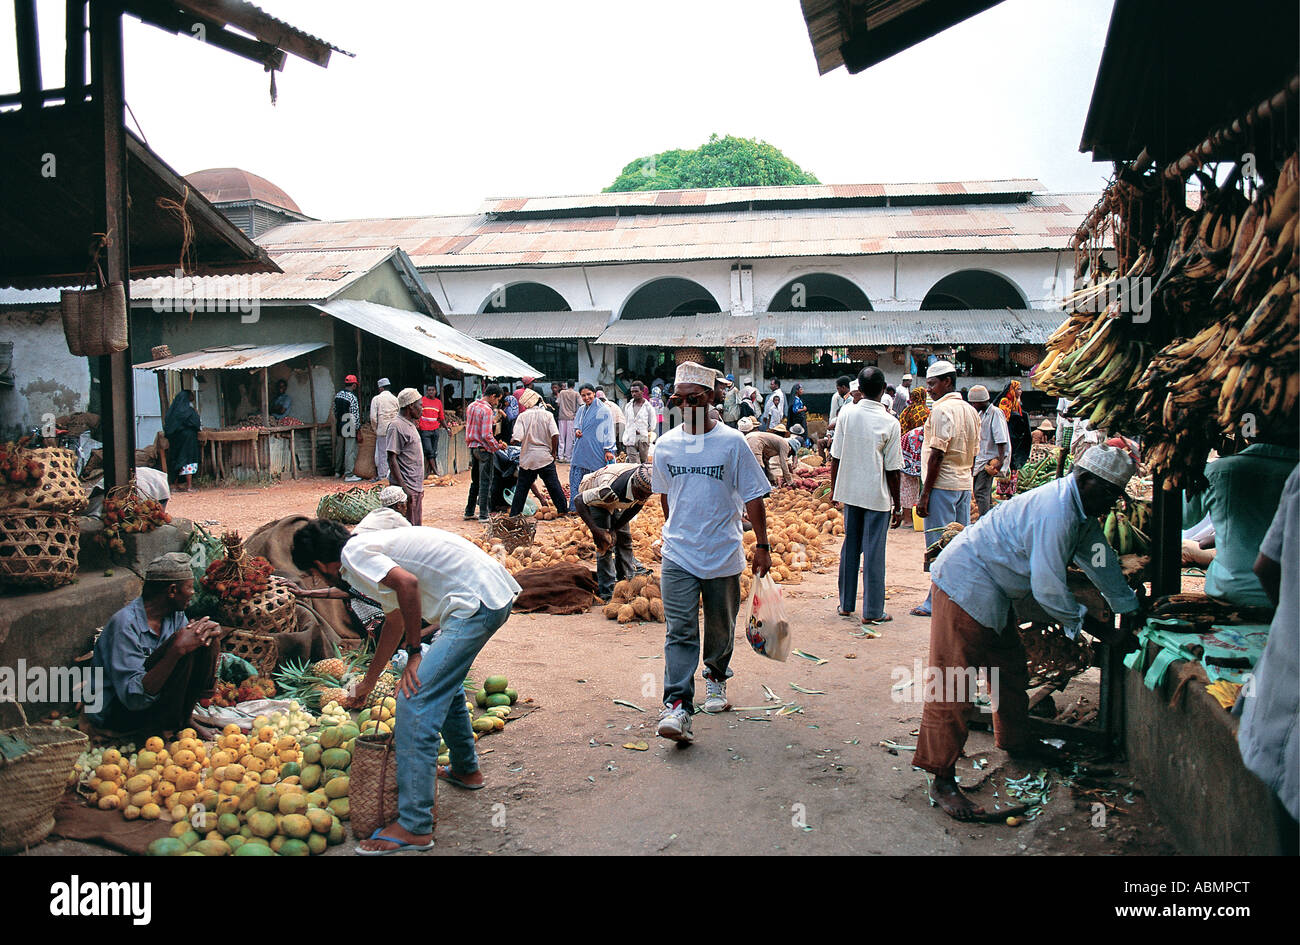 Vegetable stalls in the Central Market established in 1904 near Stonetown Zanzibar Tanzania Stock Photo